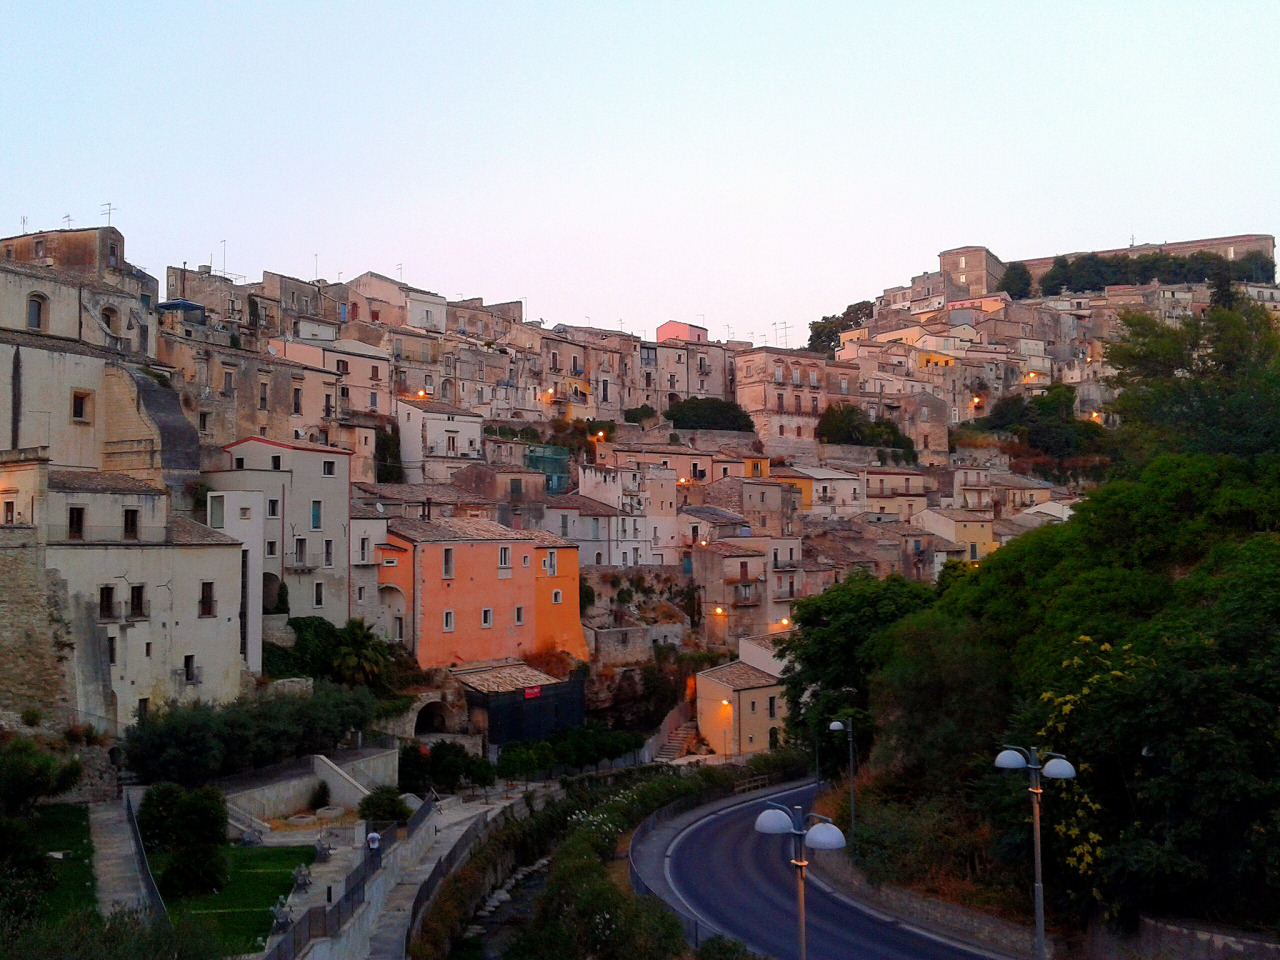 breathtakingdestinations:
“ Ragusa - Italy (by tabbiska)
”